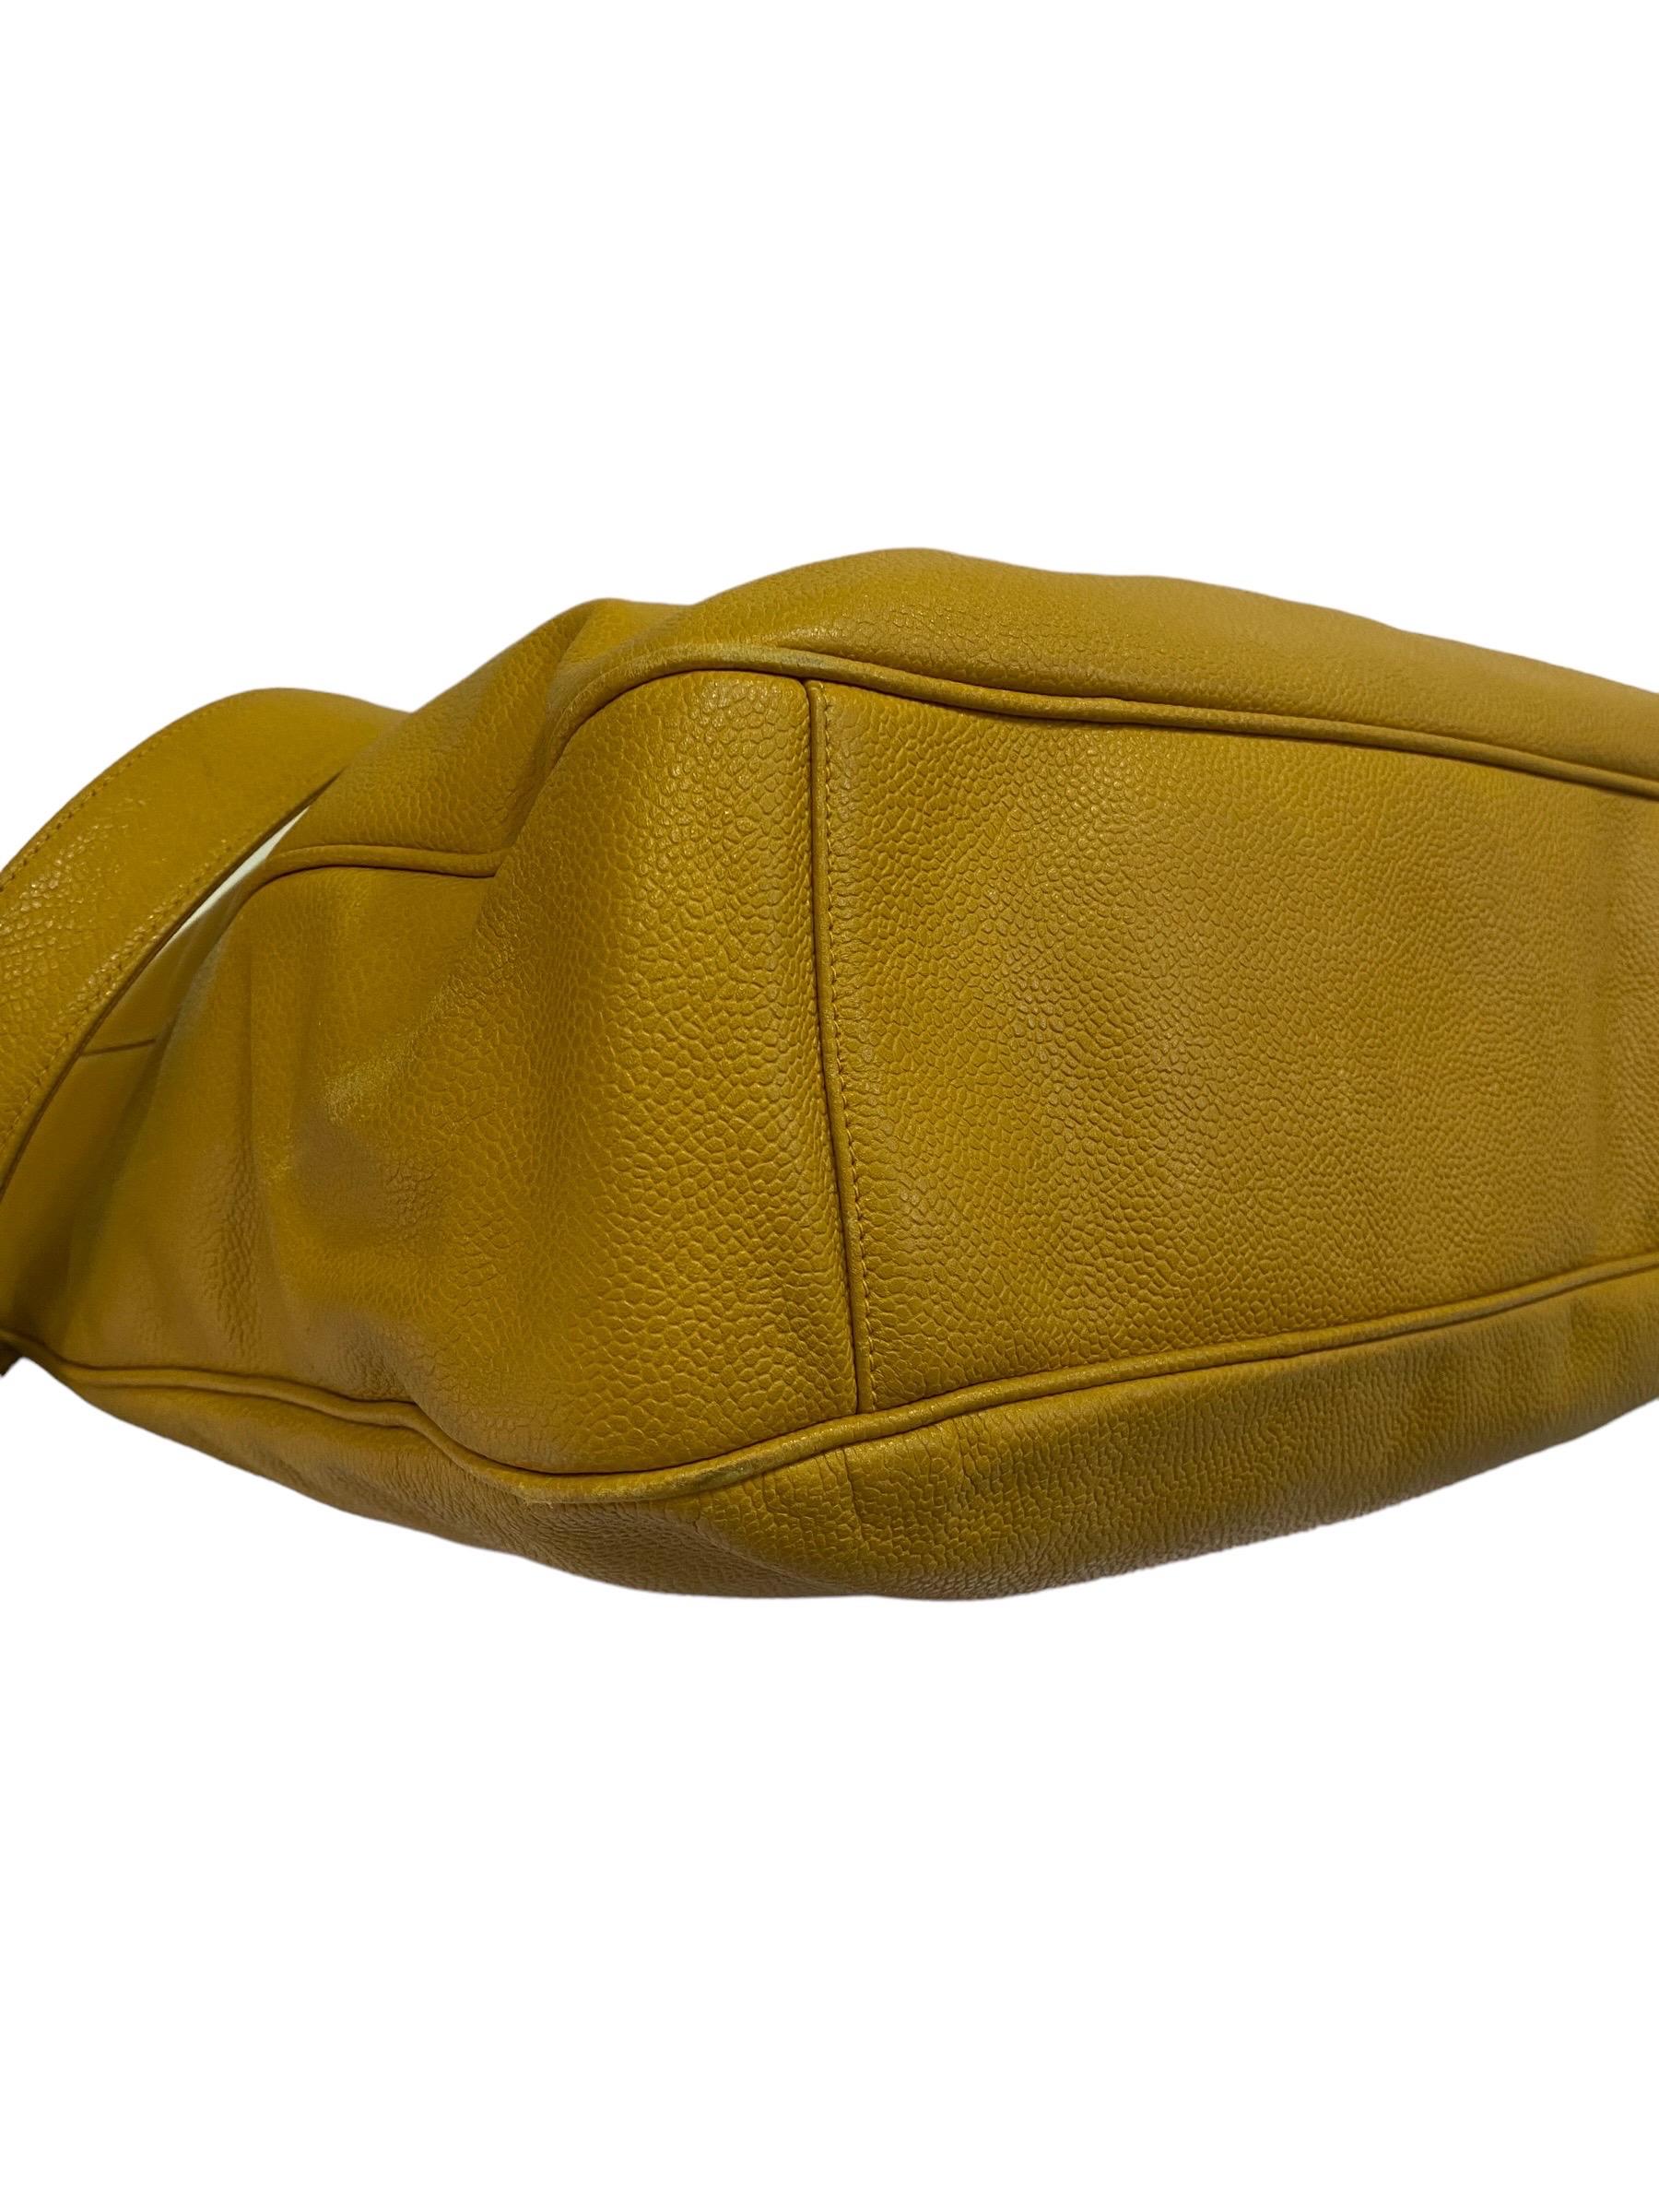 Chanel Yellow Big Tote Shoulder Bag Vintage  3